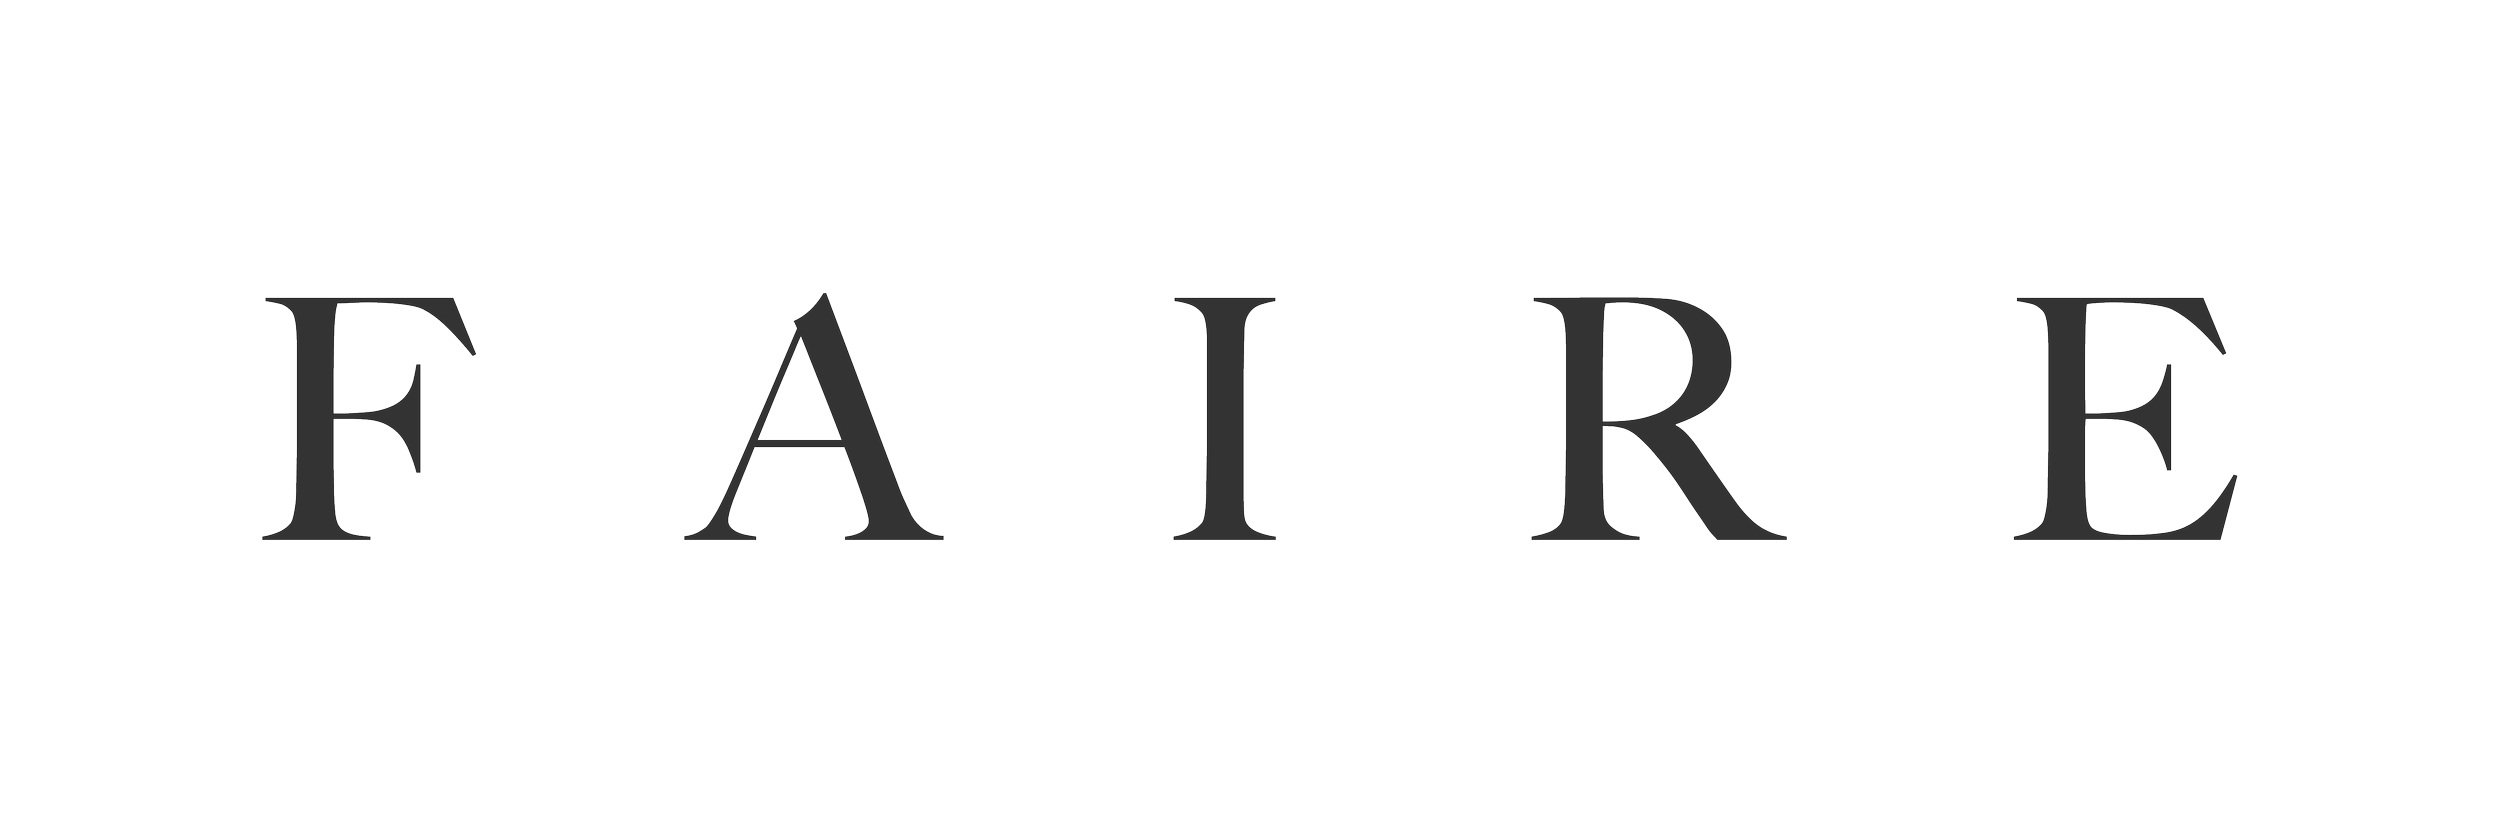 Faire_logo.jpg